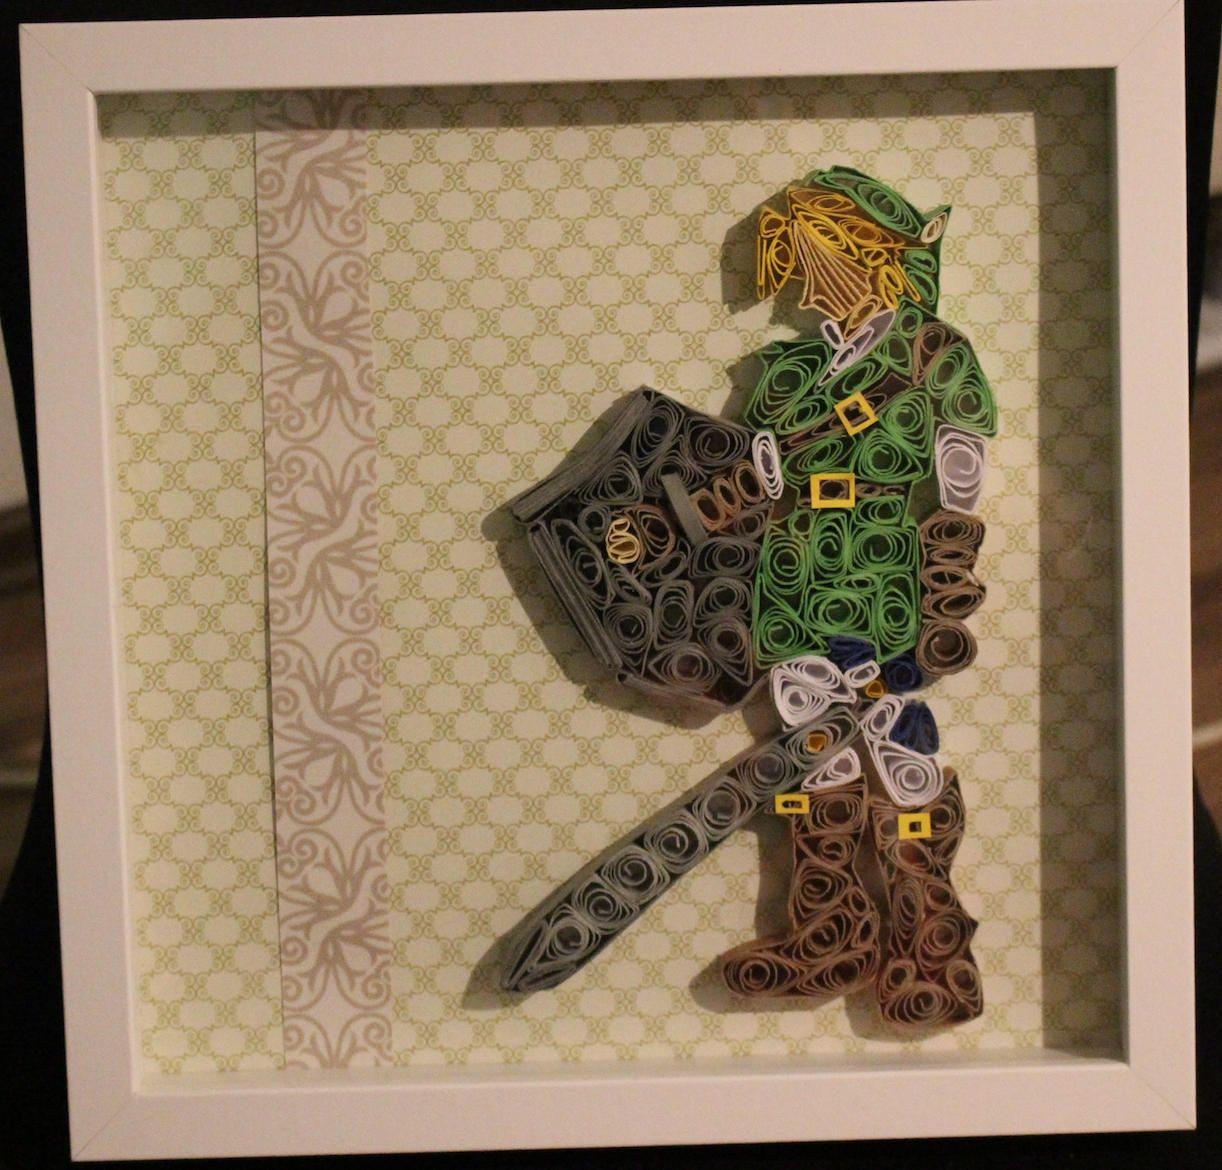 Papercraft Legend Of Zelda Zelda Link Legend Of Zelda Quilling Abstract Art Home Decor Gifts